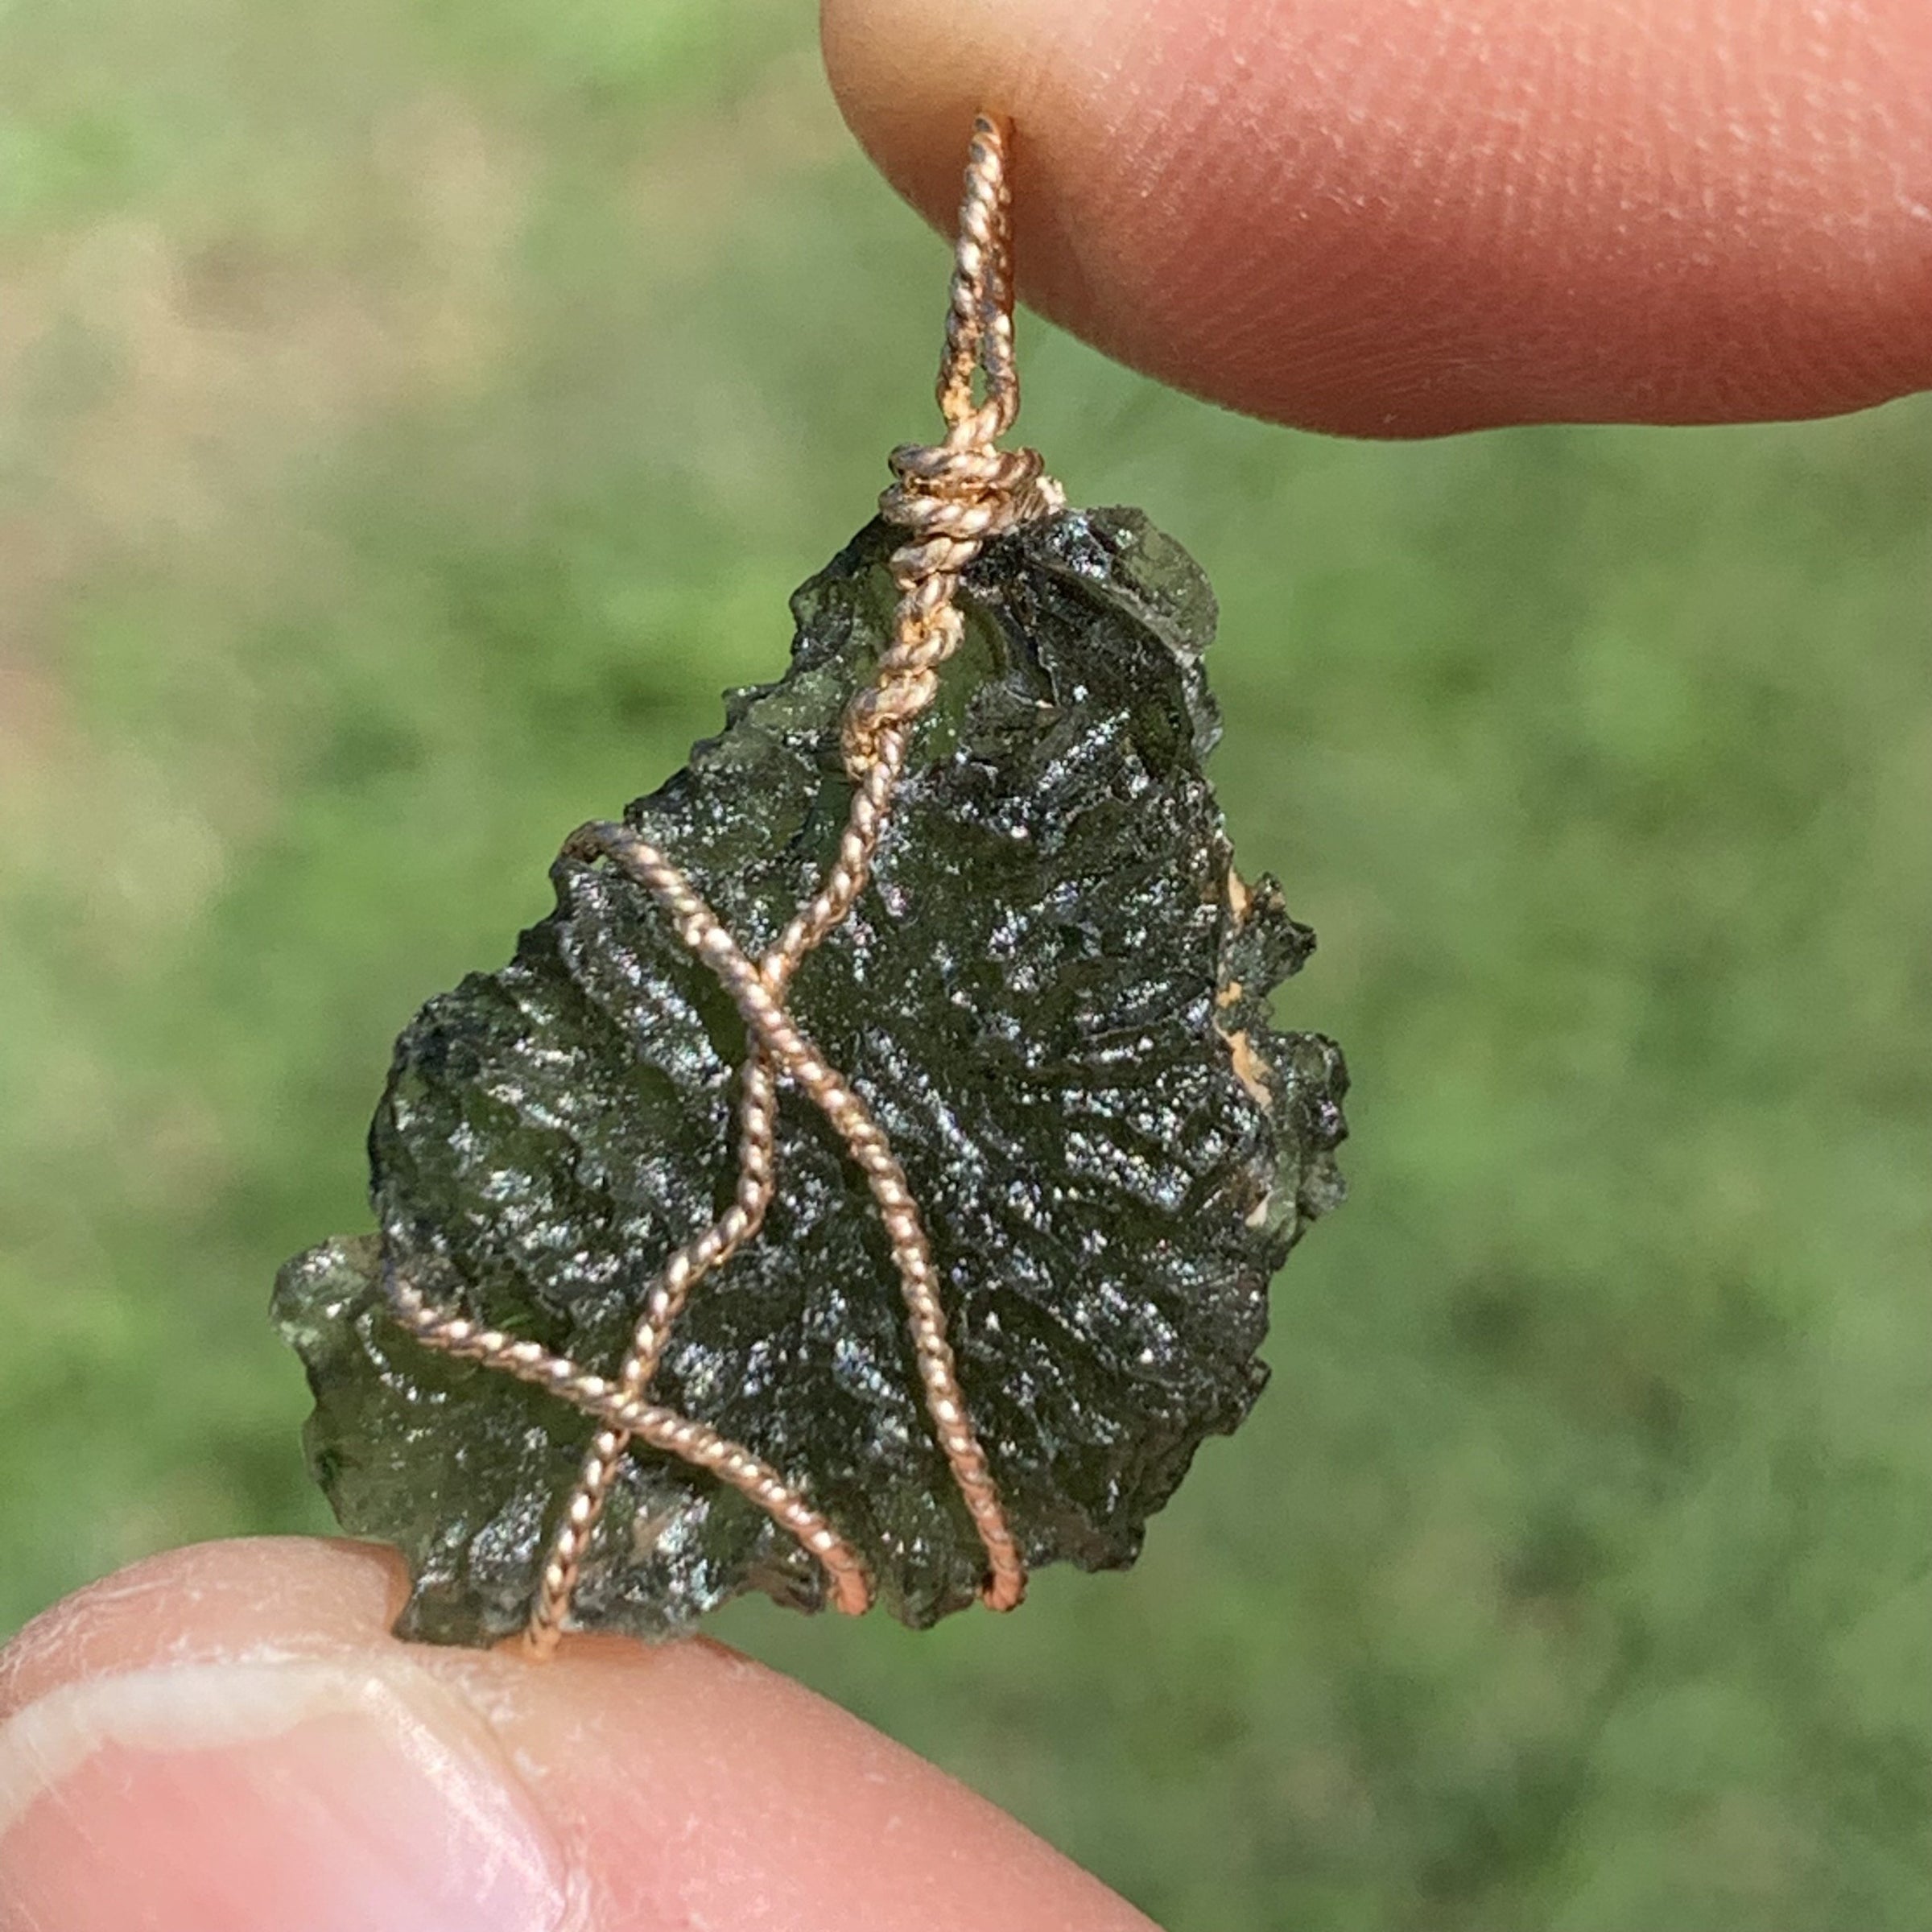 14k Gold Moldavite Pendant Wire Wrapped-Moldavite Life